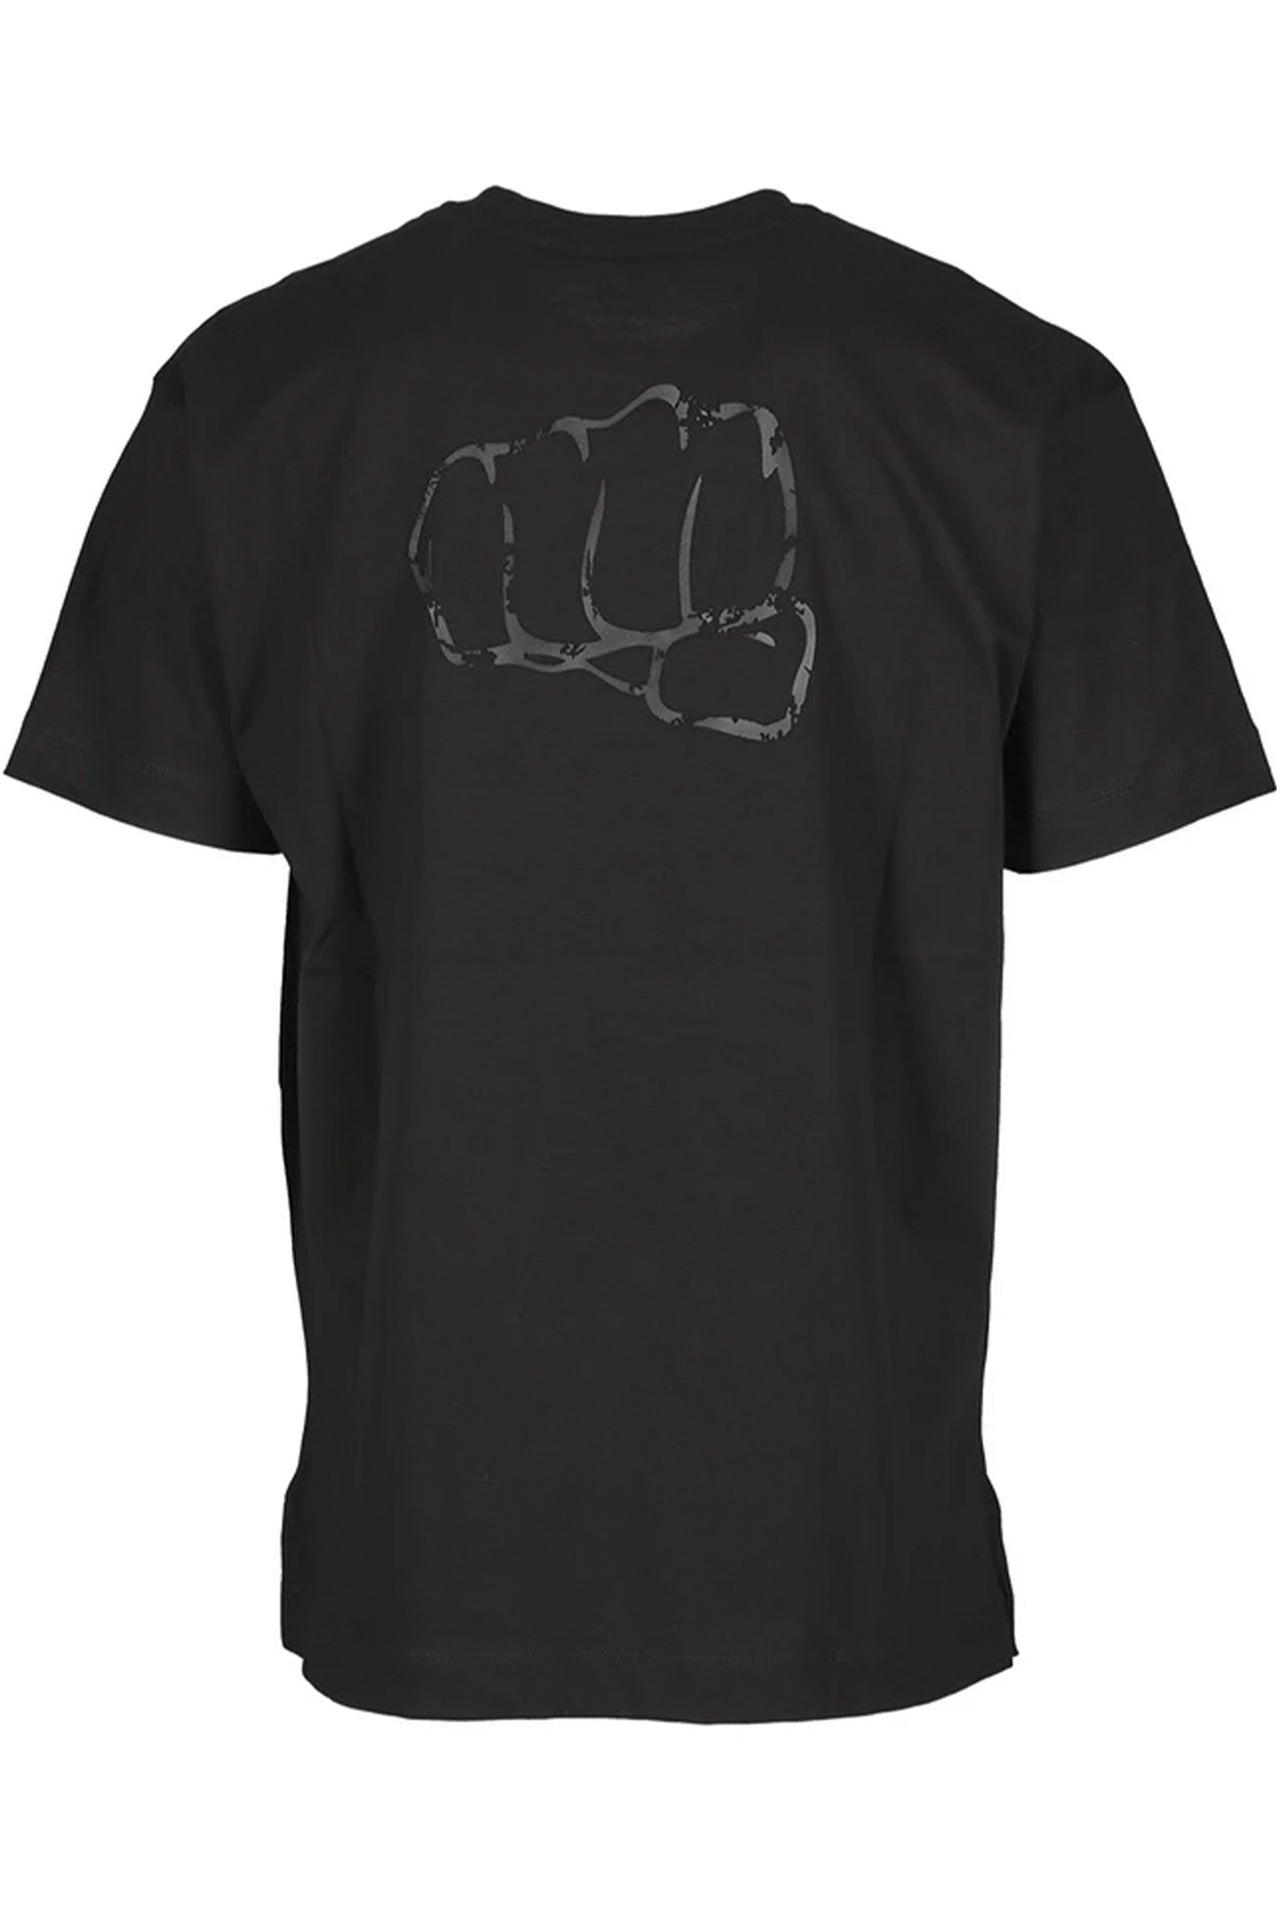 Camiseta Fist Oversized London Negro